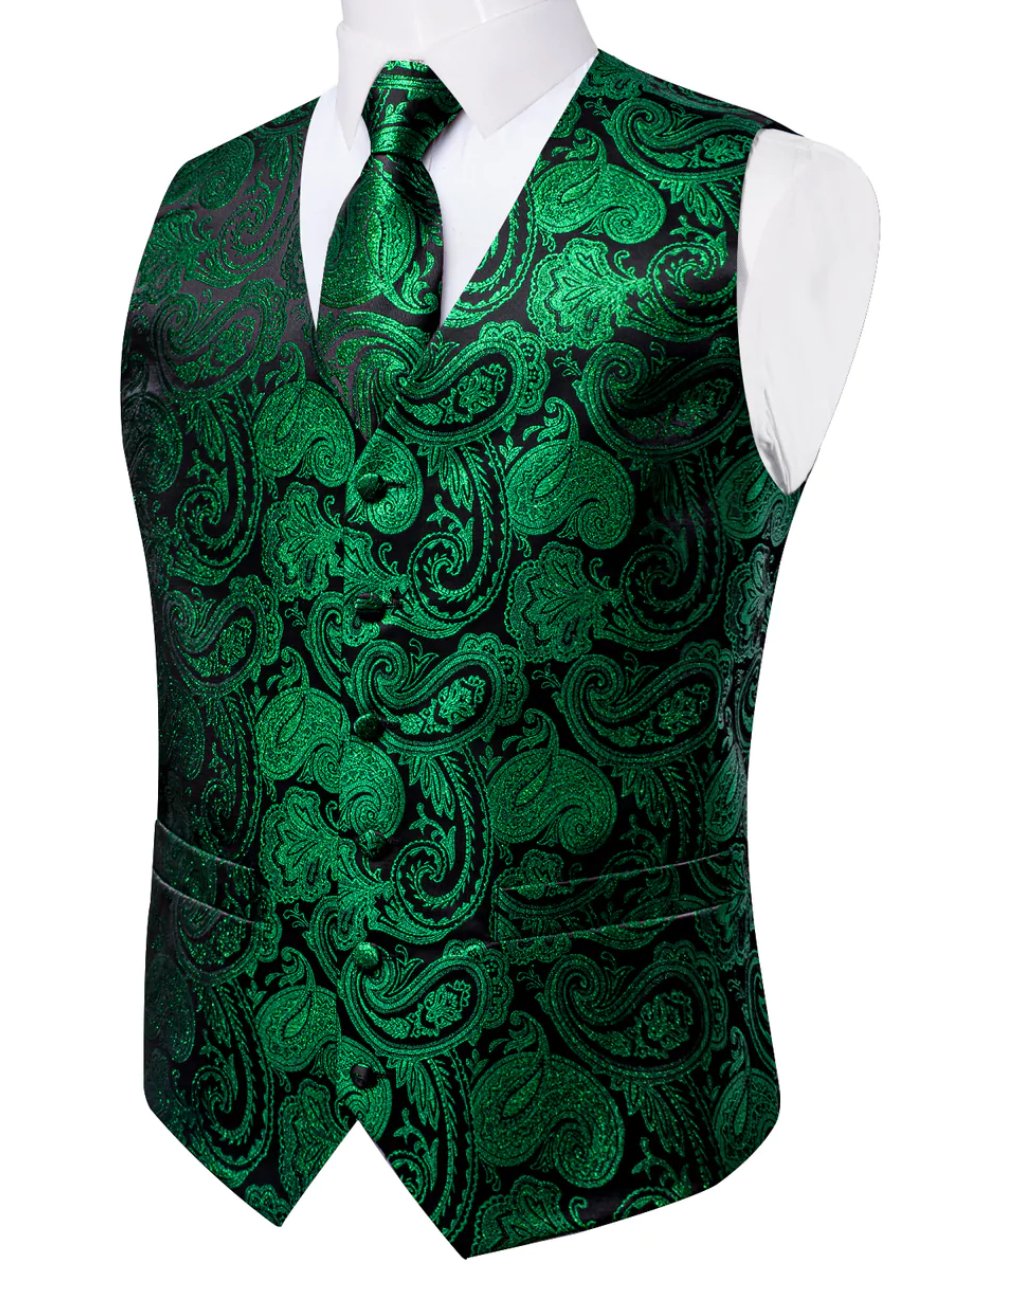 Simon Von Green Paisley Jacquard Silk Waistcoat Vest Handkerchief Cufflinks Tie Set - MJ0149 - SimonVon Shop